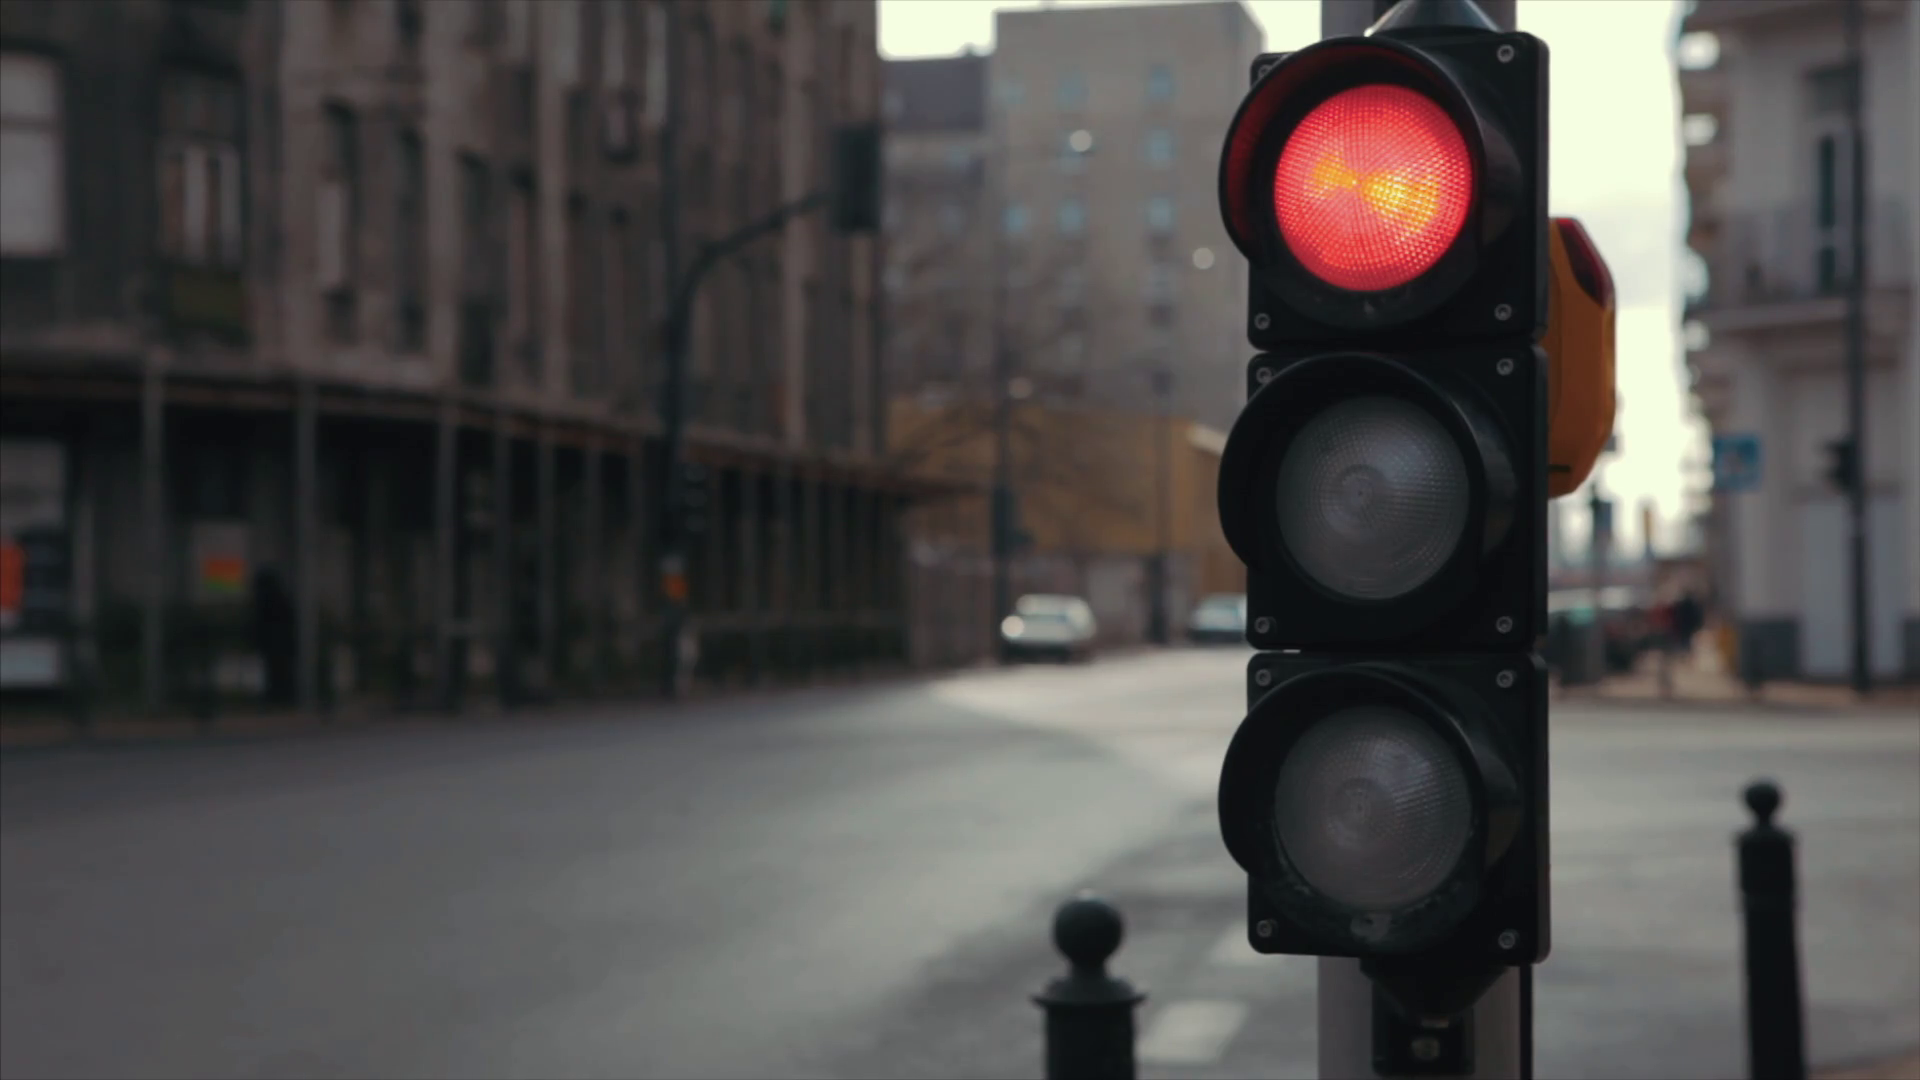 Traffic light red. Светофор. Красный свет светофора. Красивый светофор. Красный светофор на дороге.